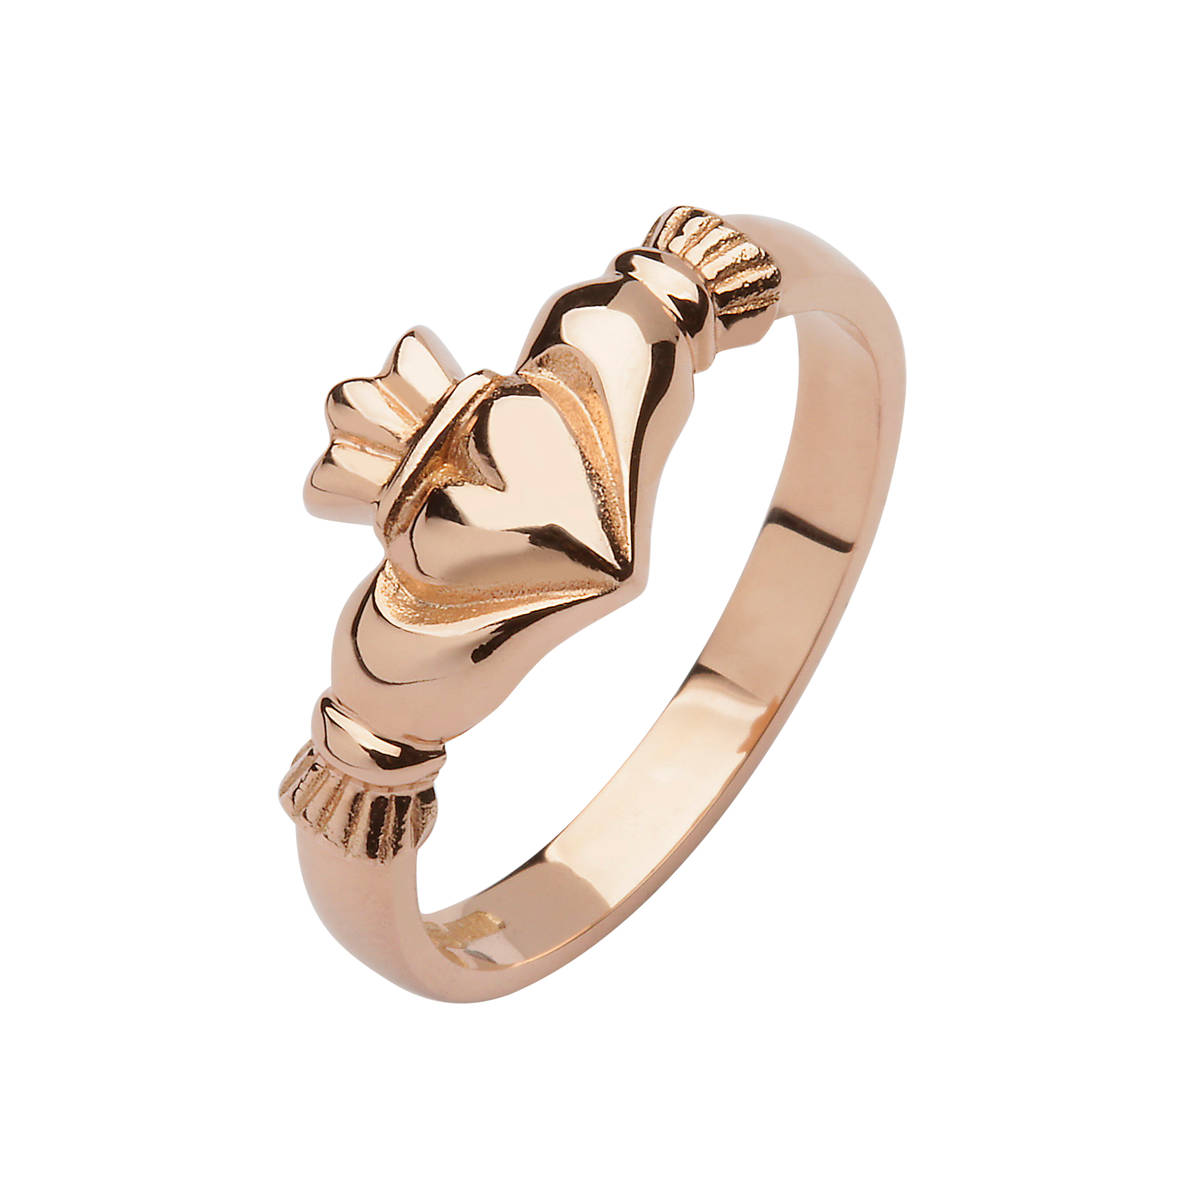 10ct rose gold Elegance Claddagh ring
